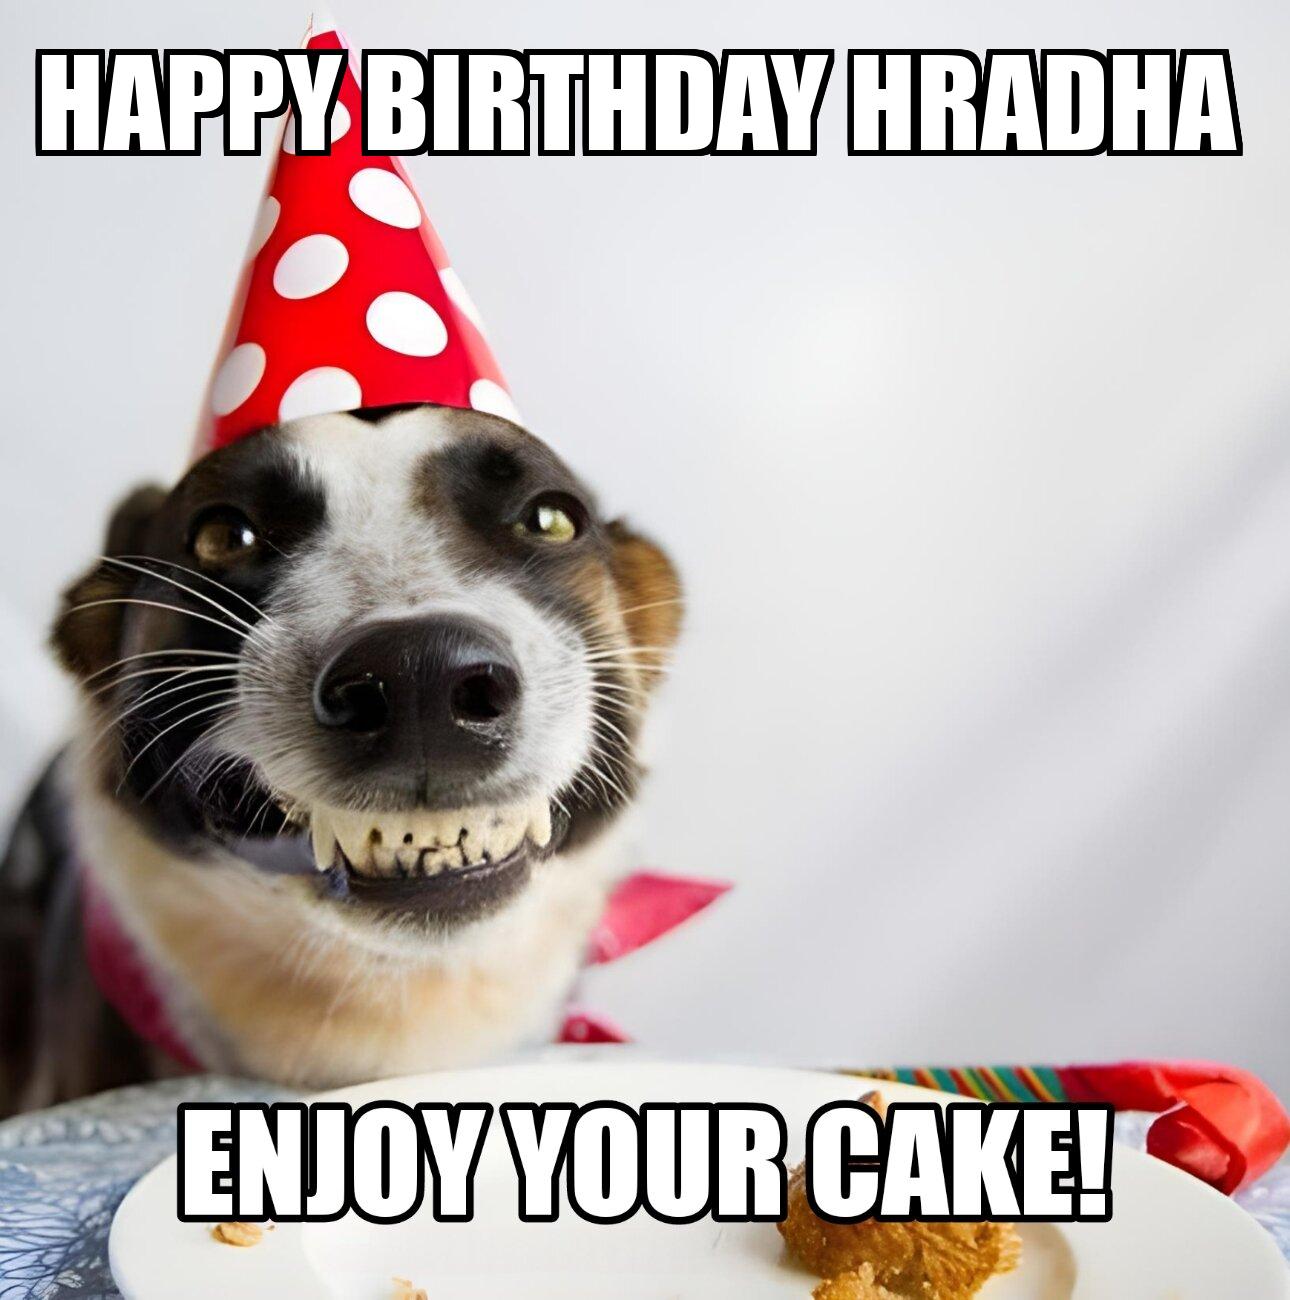 Happy Birthday Hradha Enjoy Your Cake Dog Meme